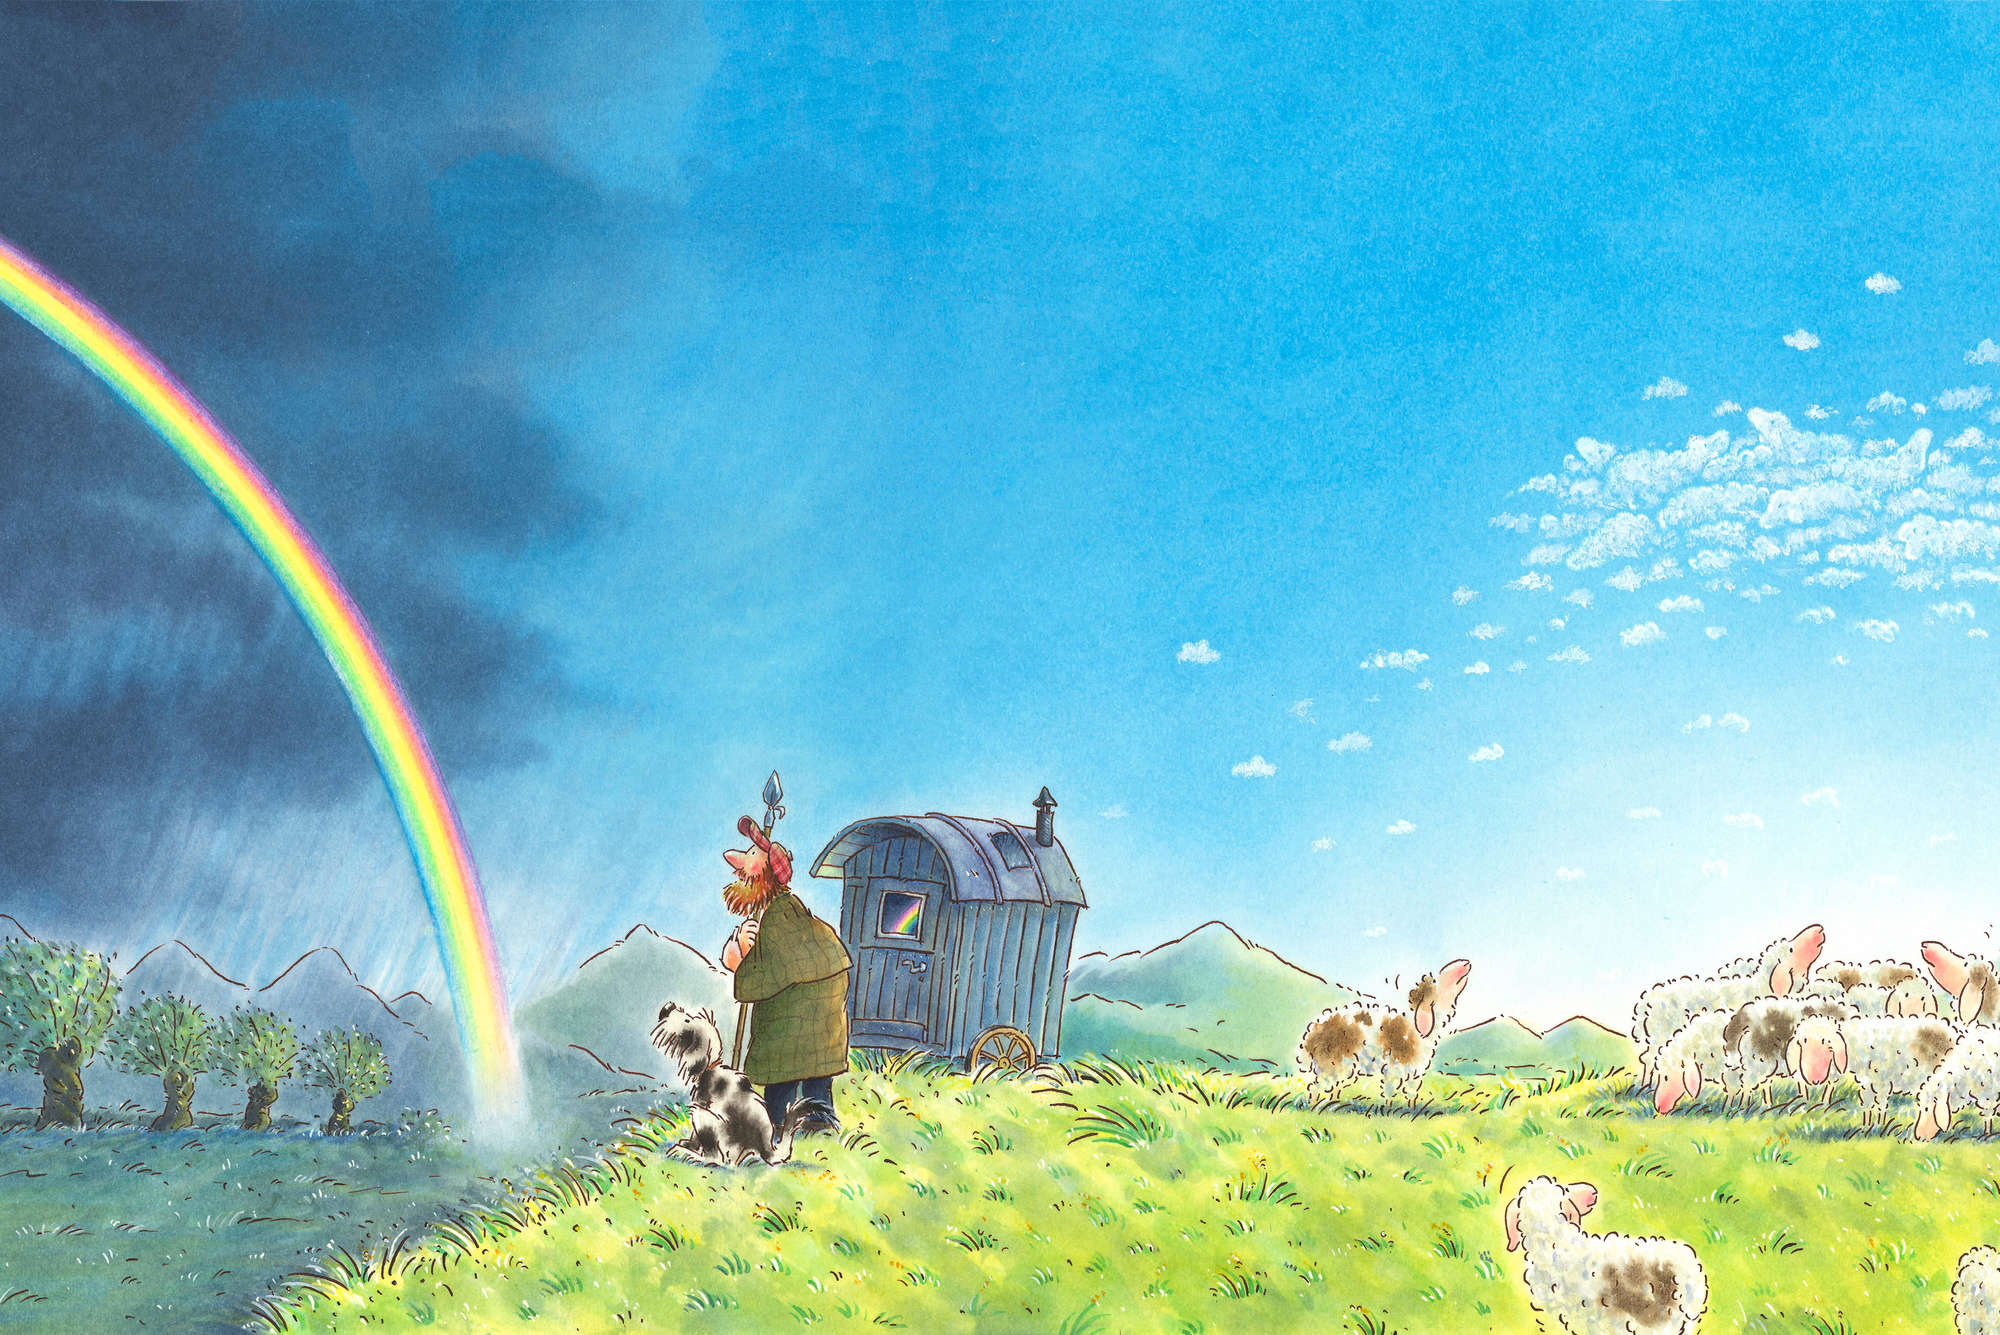             Children mural shepherd with dog and rainbow on textured fleece
        